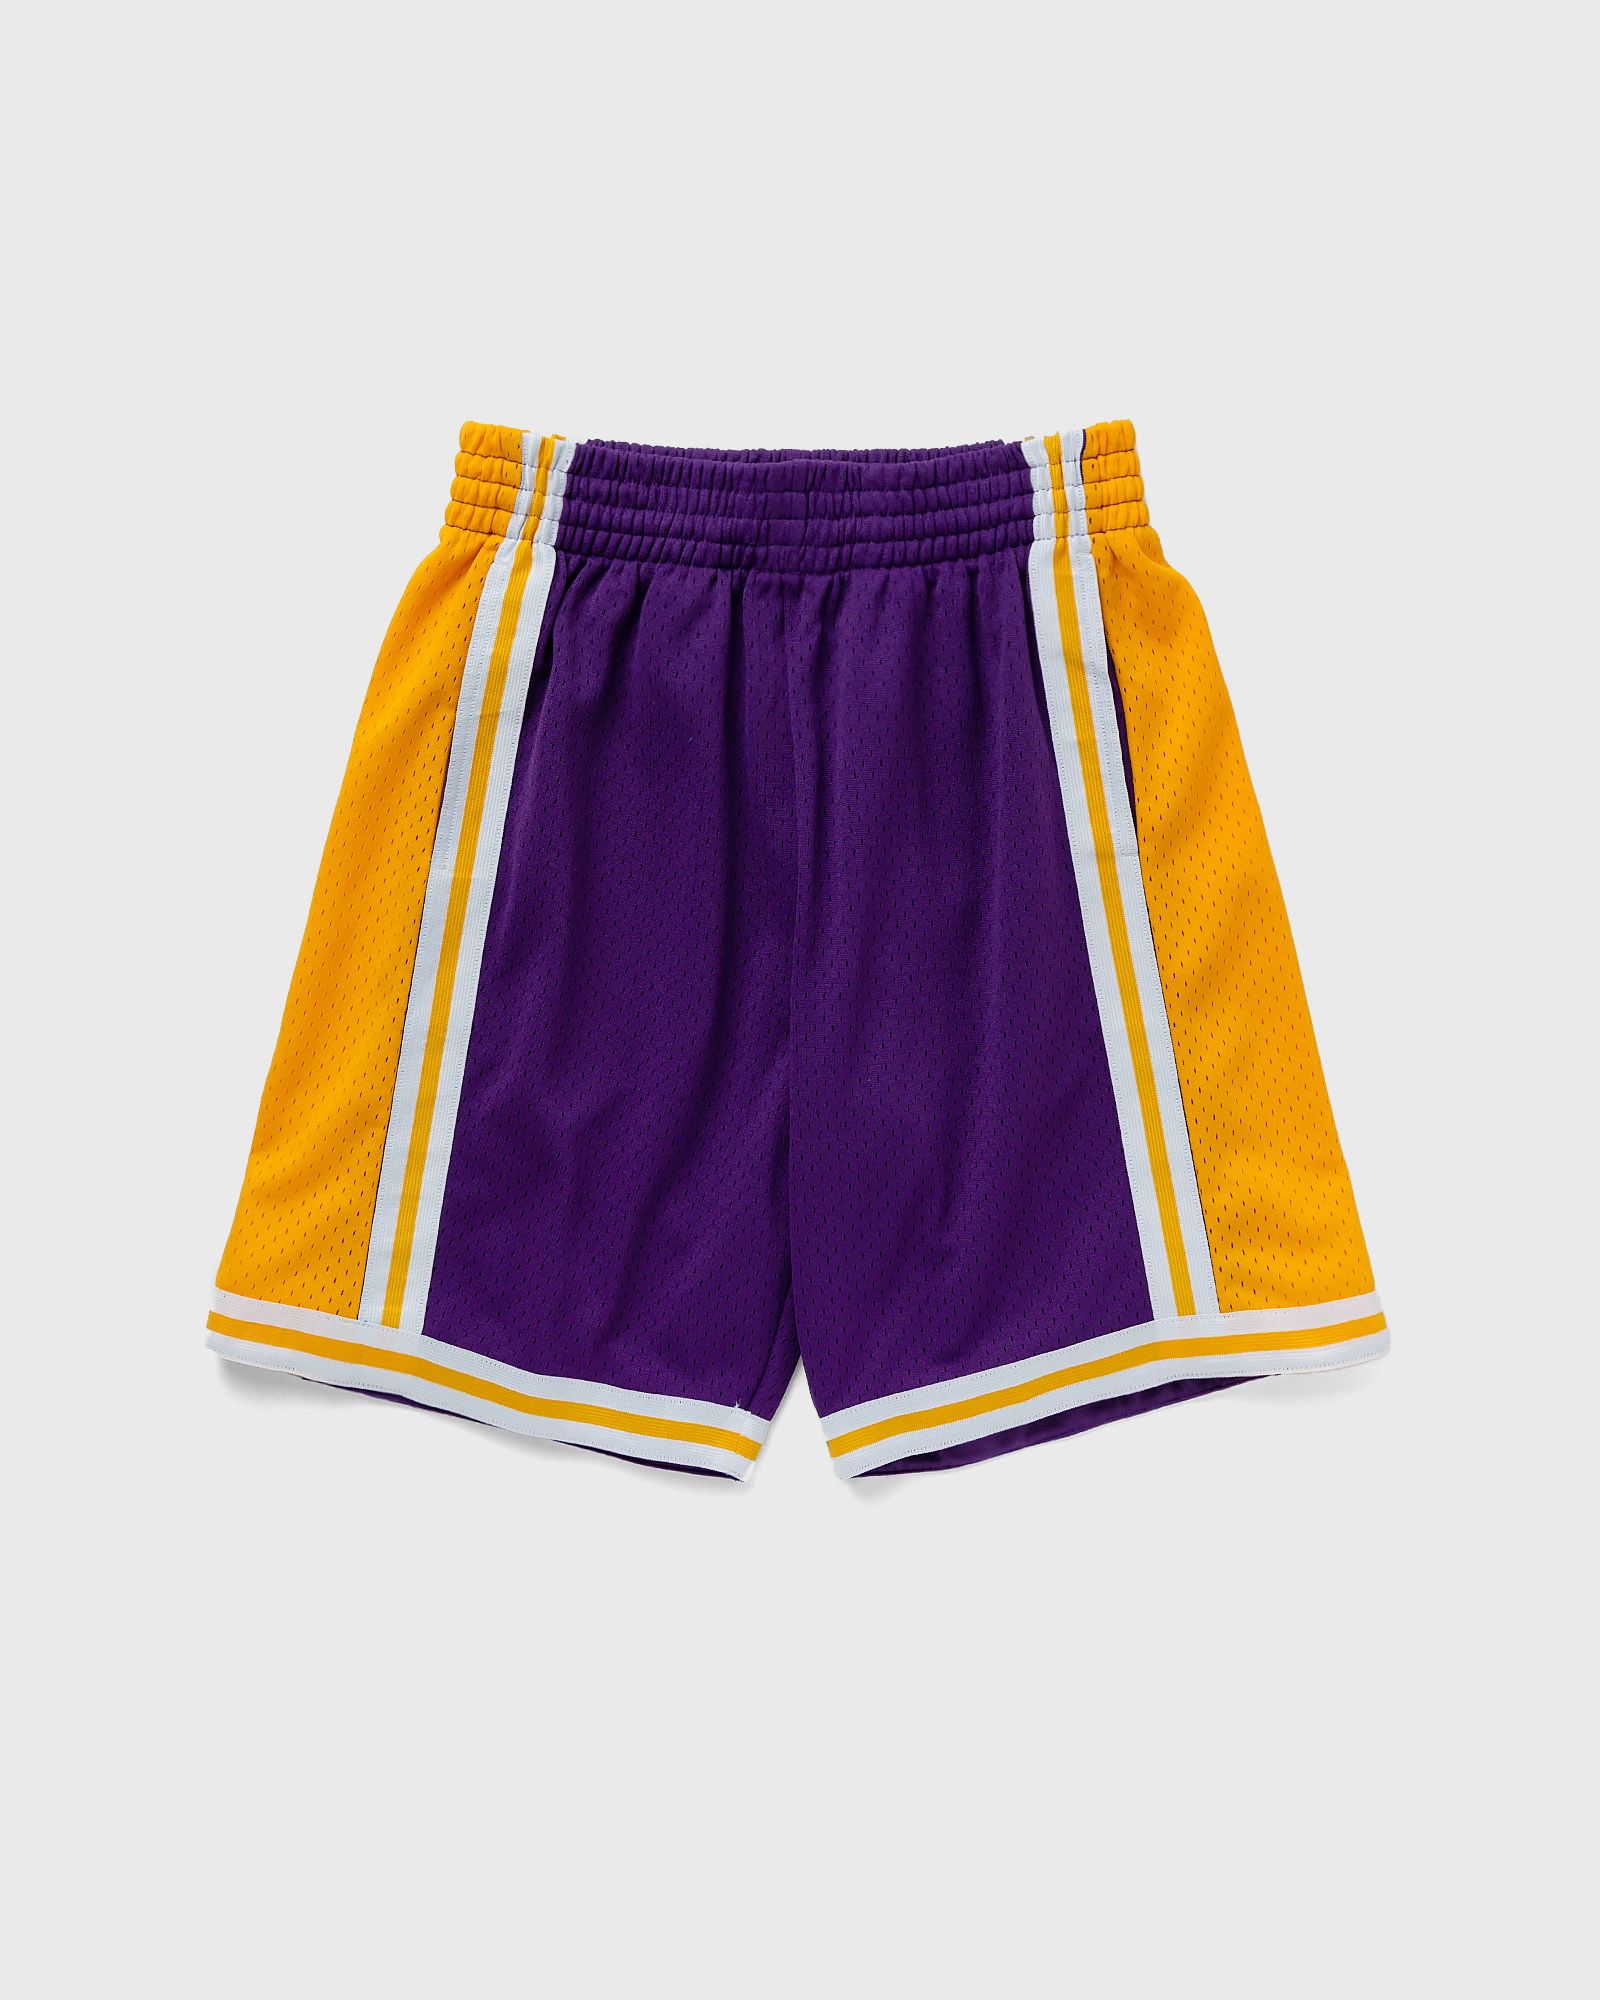 Mitchell & Ness - nba swingman shorts los angeles lakers road 1984-85 men sport & team shorts purple|yellow in größe:xxl